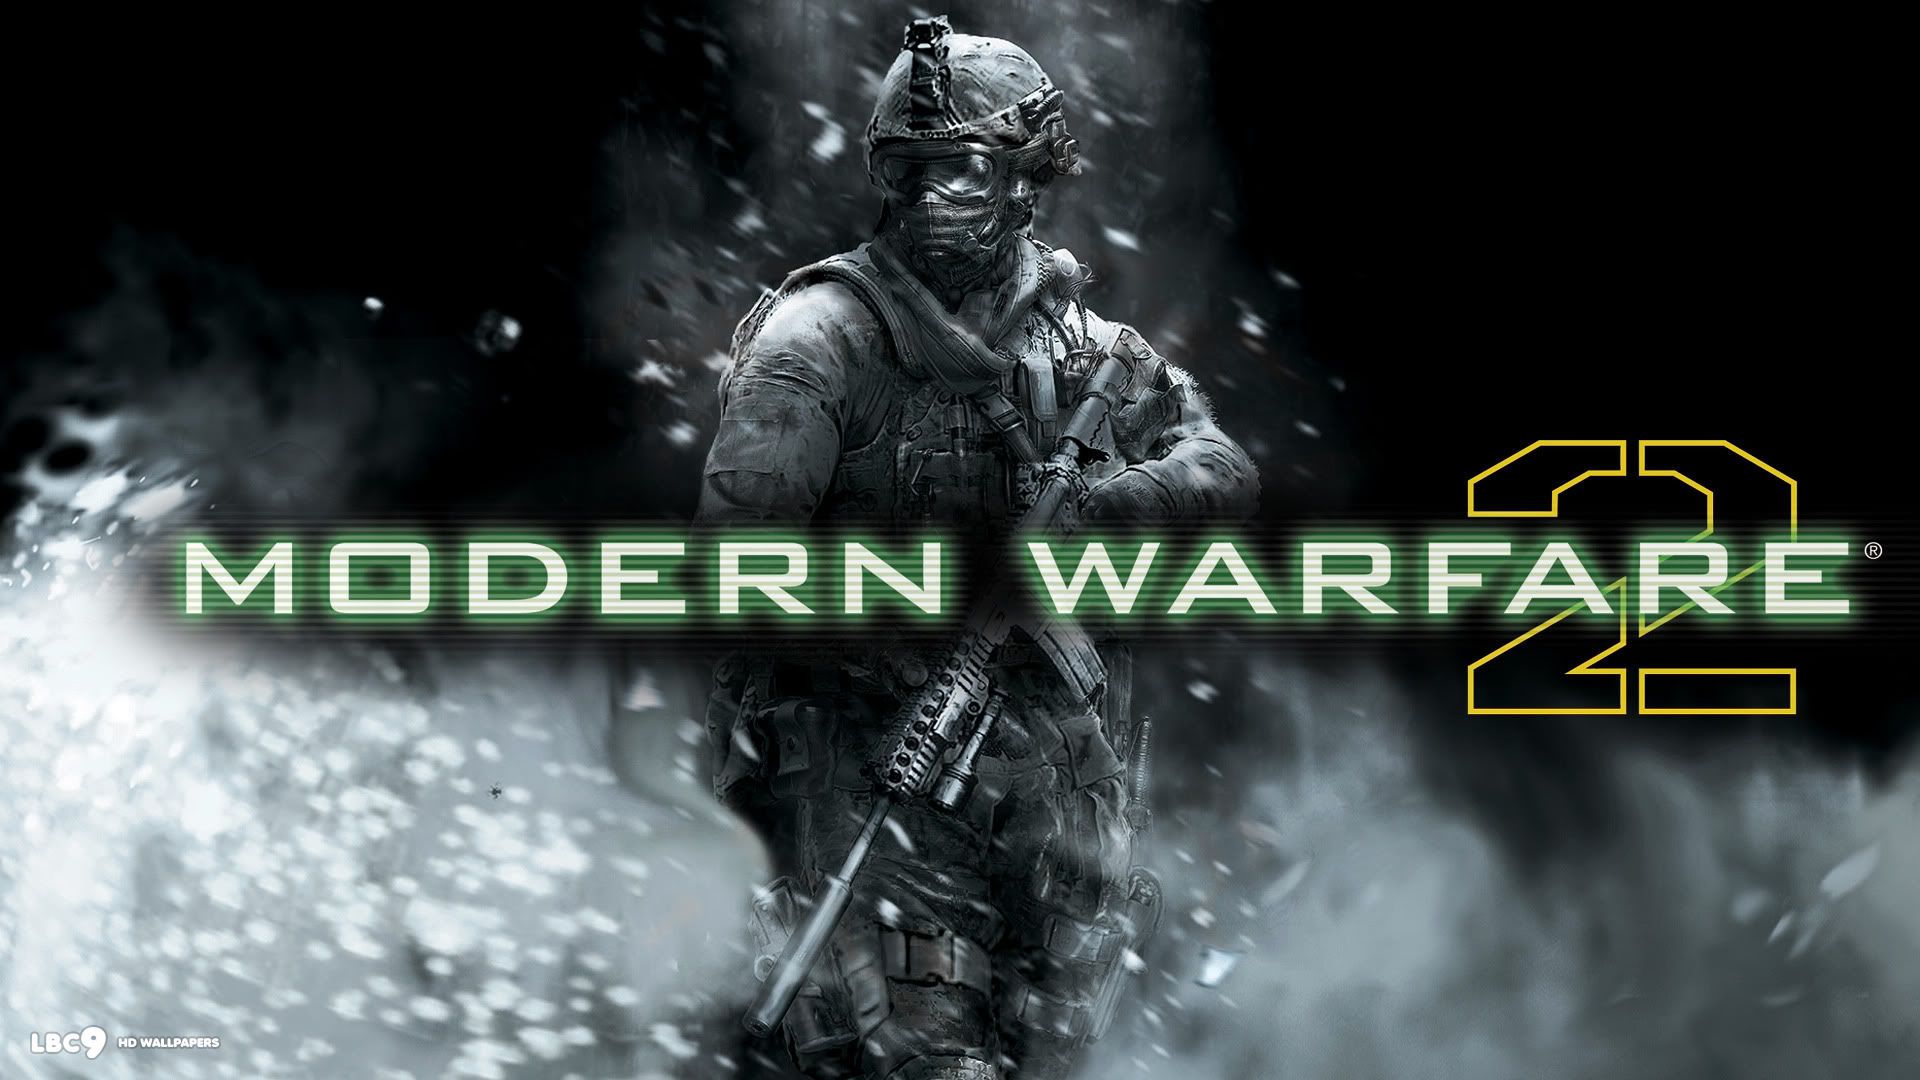 Zzl Call Of Duty Modern Warfare HD Image Large